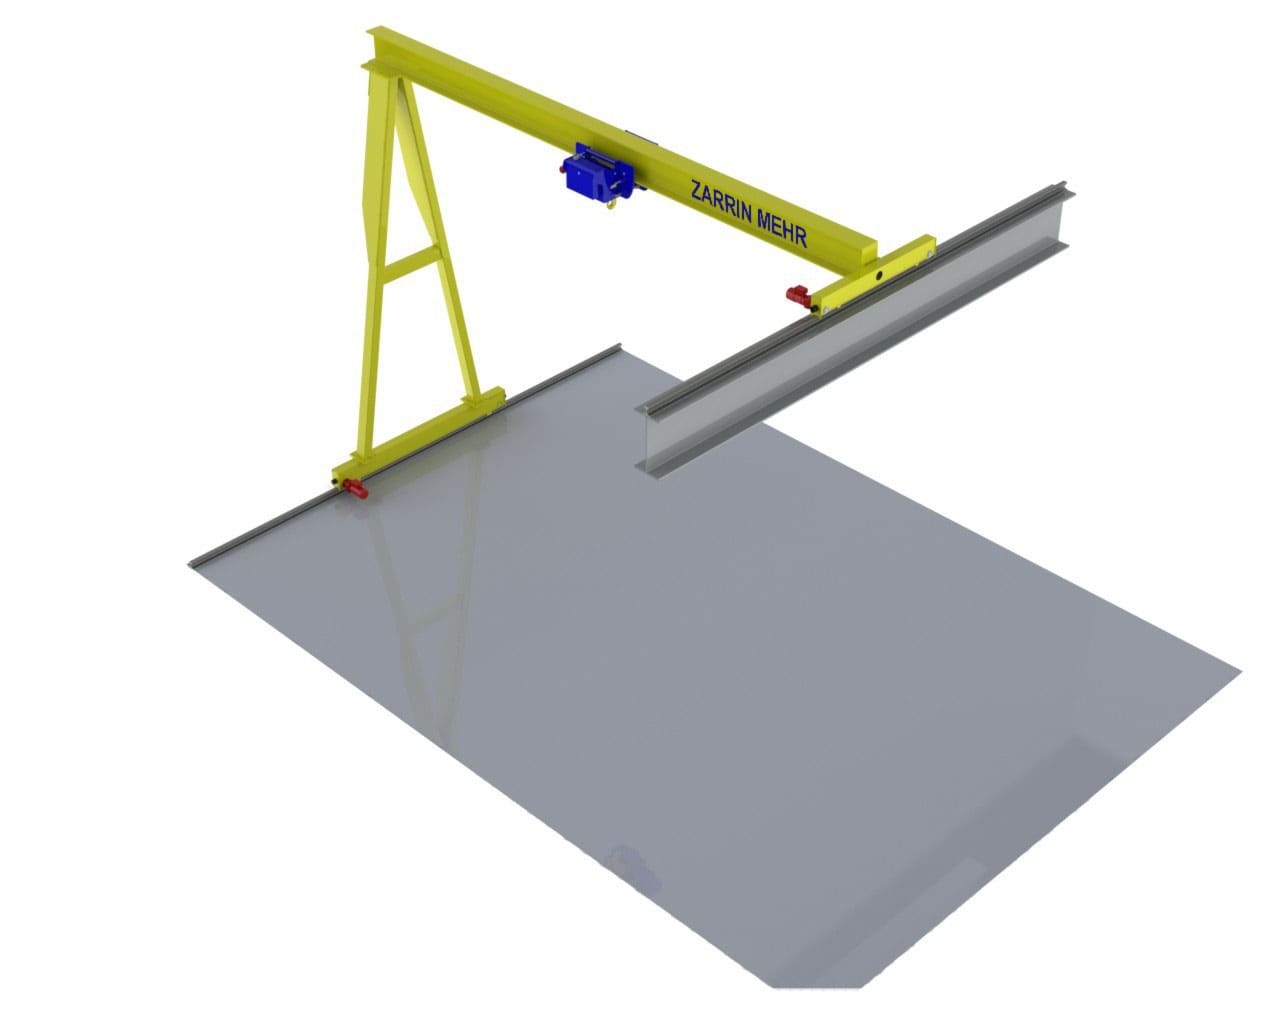 3D model of ZARRIN MEHR's Single Girder Semi-Gantry Crane, optimized for lighter loads in mixed indoor/outdoor industrial settings.